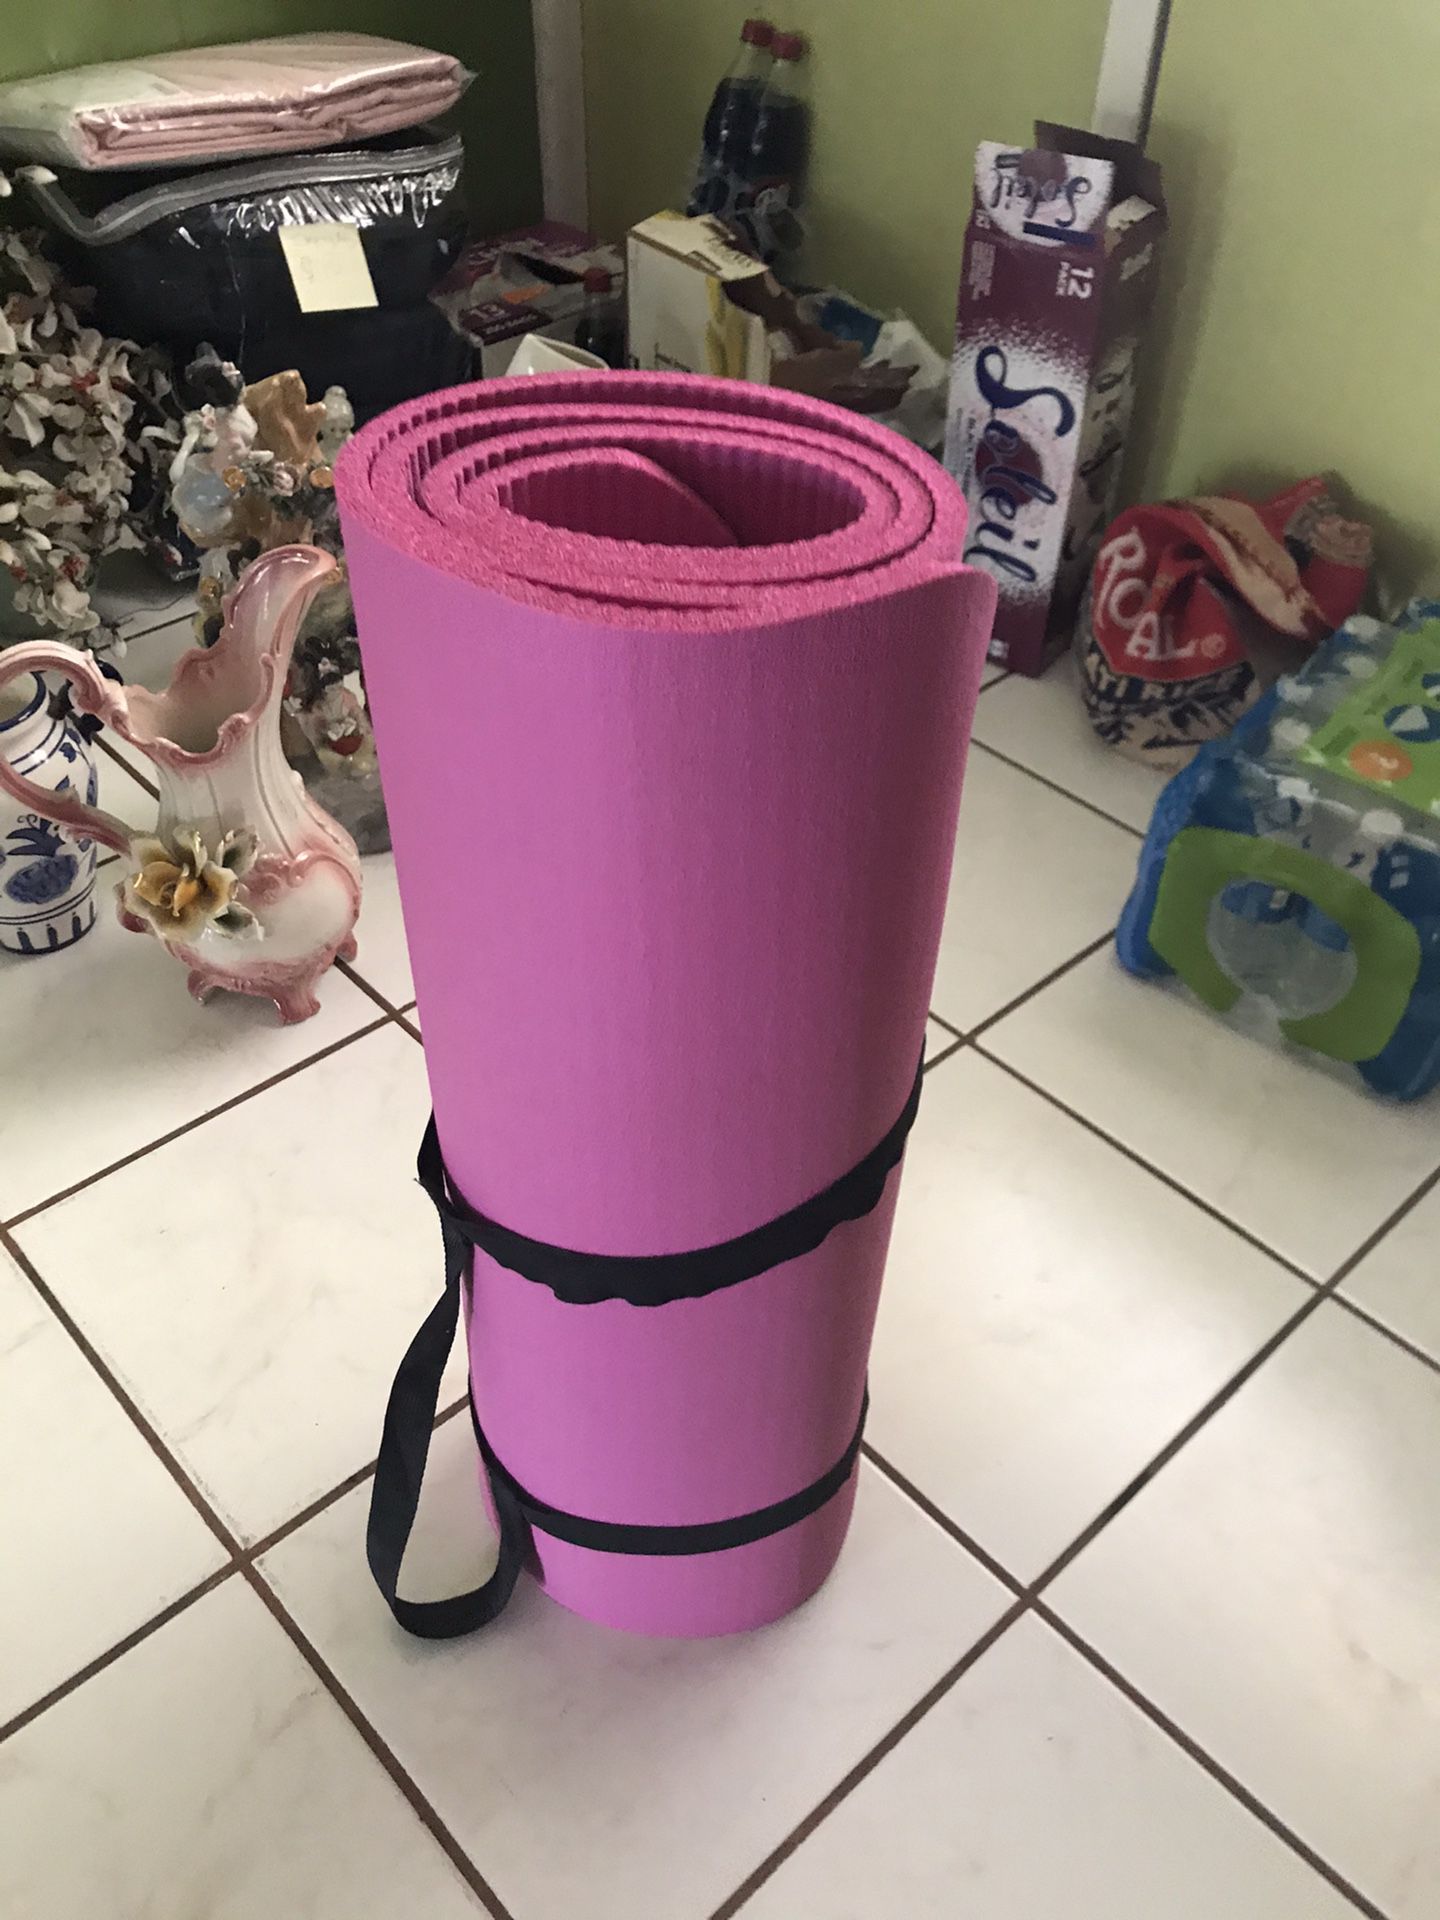 Yoga mat $5